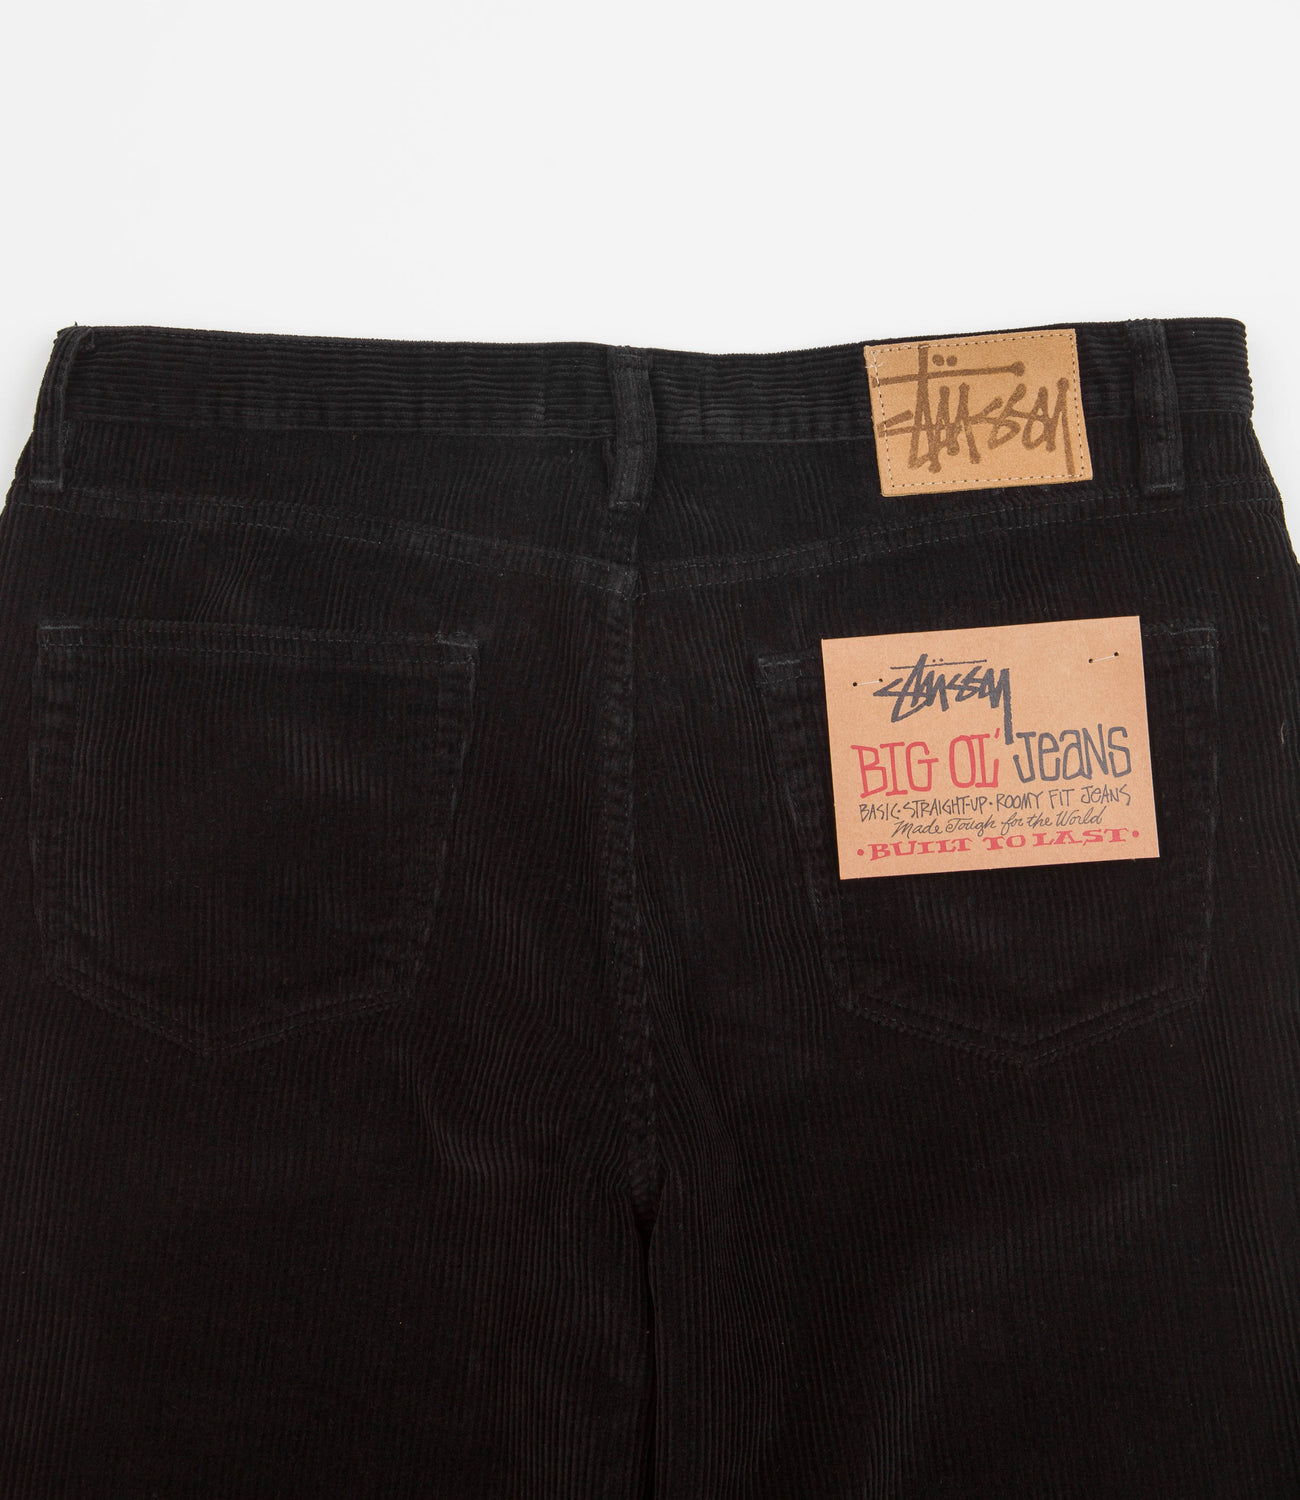 Stussy Corduroy Big Ol Jeans - Black | Flatspot